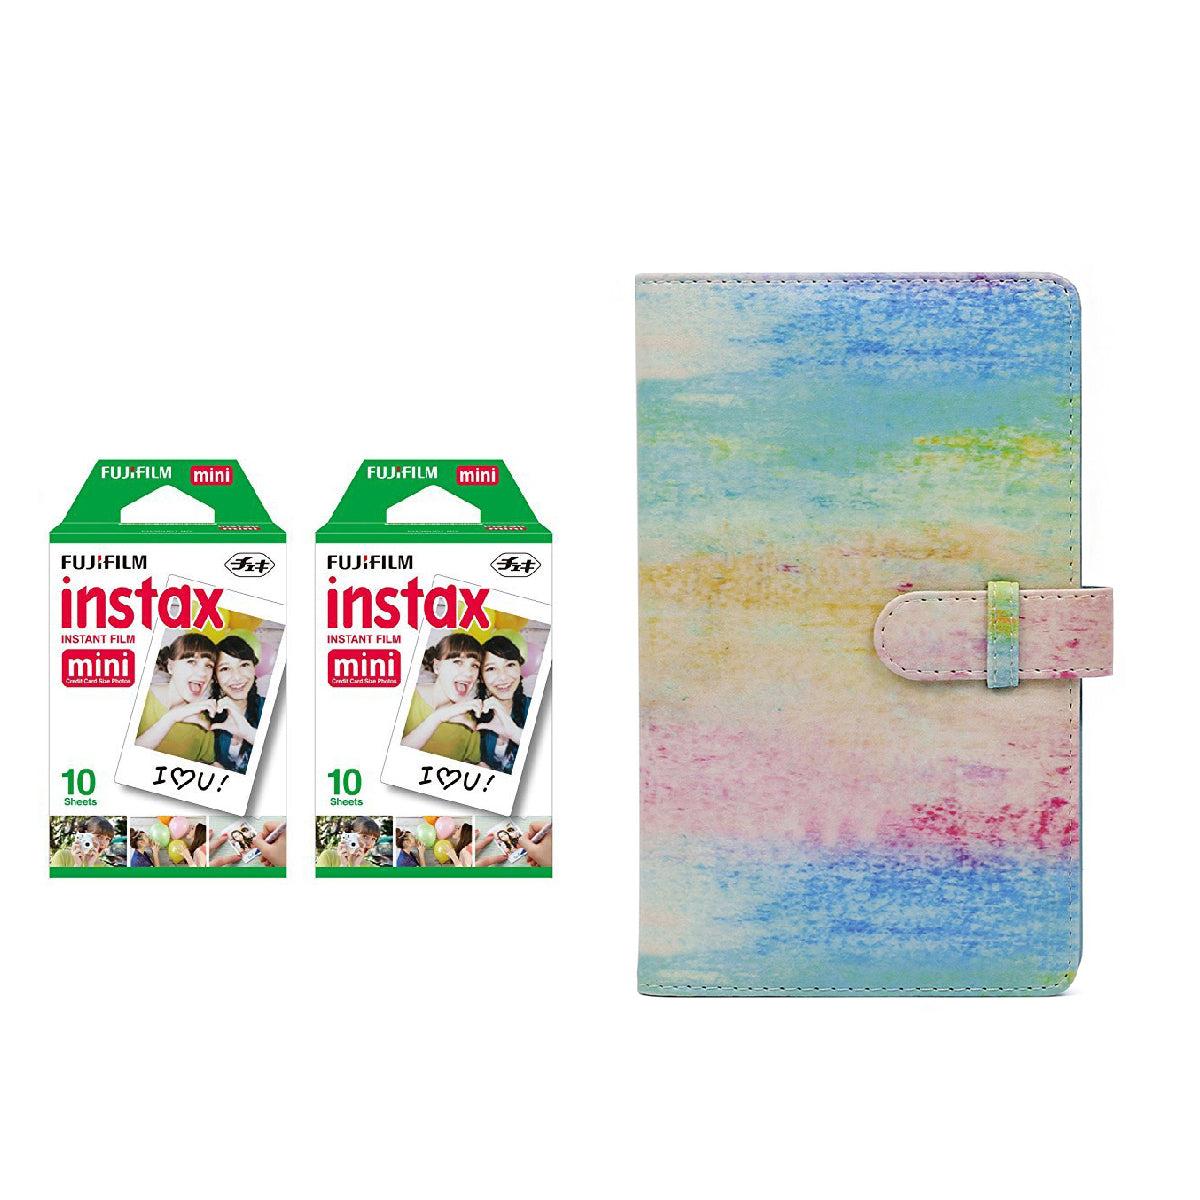 Fujifilm Instax Mini 2 Pack 10 Sheets Instant Film with 96-sheet Album for mini film (Watercolor)